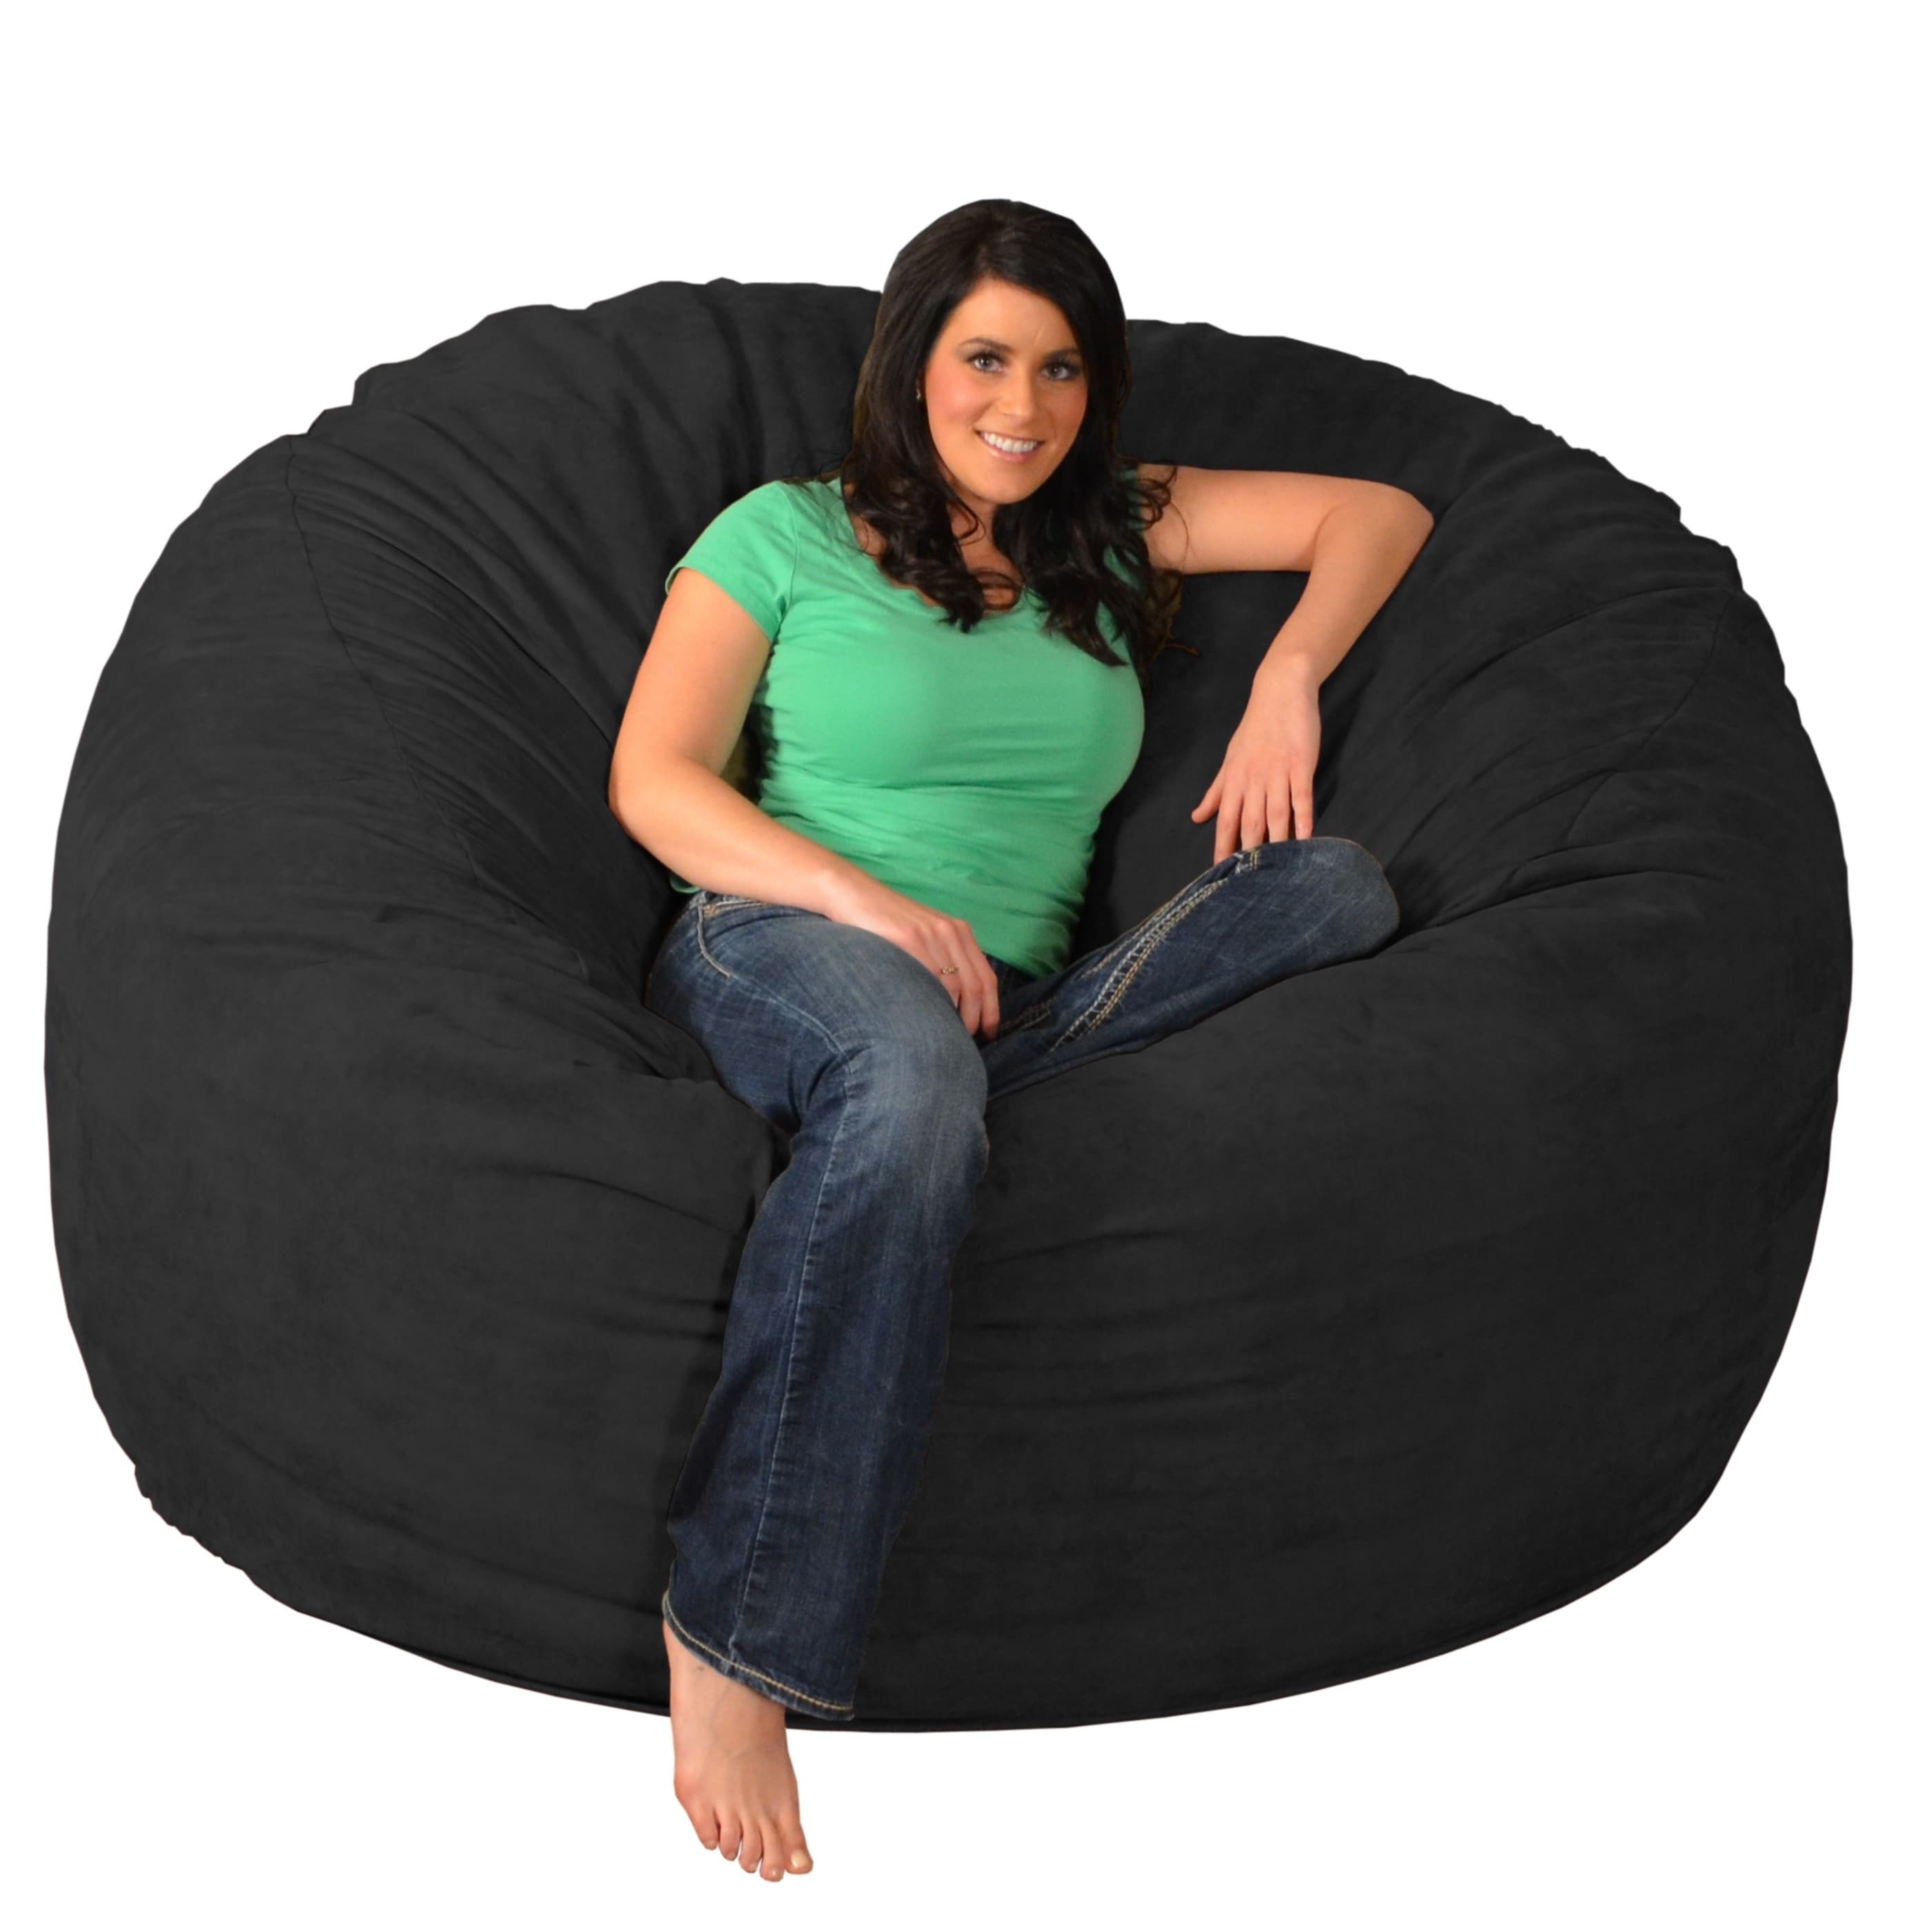 Shop Giant Memory Foam Bean Bag 6 Foot Chair On Sale Overstock